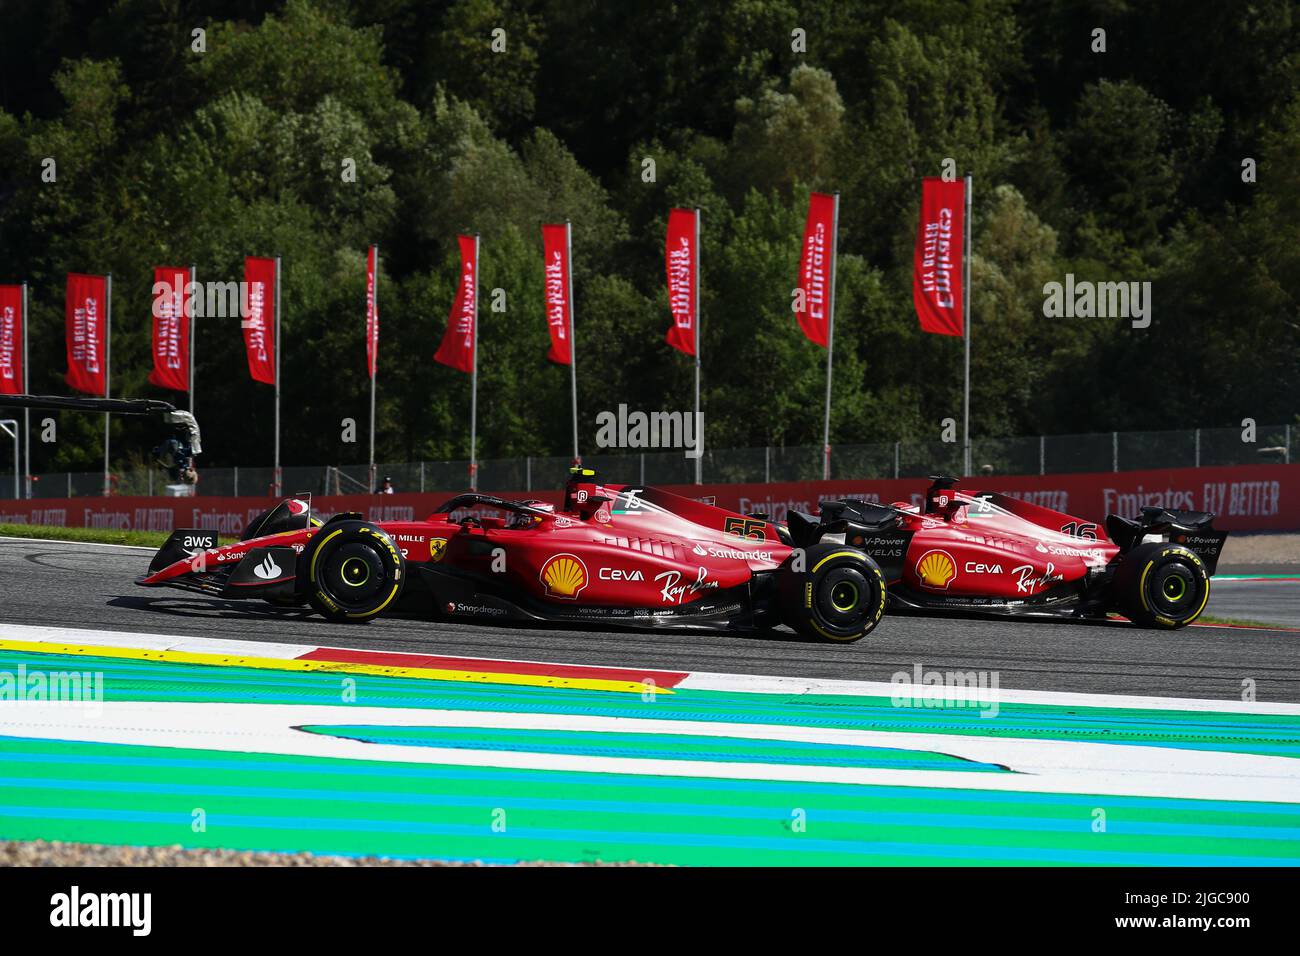 Ferrari F1 2022 car poster F1-75 | Charles Leclerc Carlos Sainz